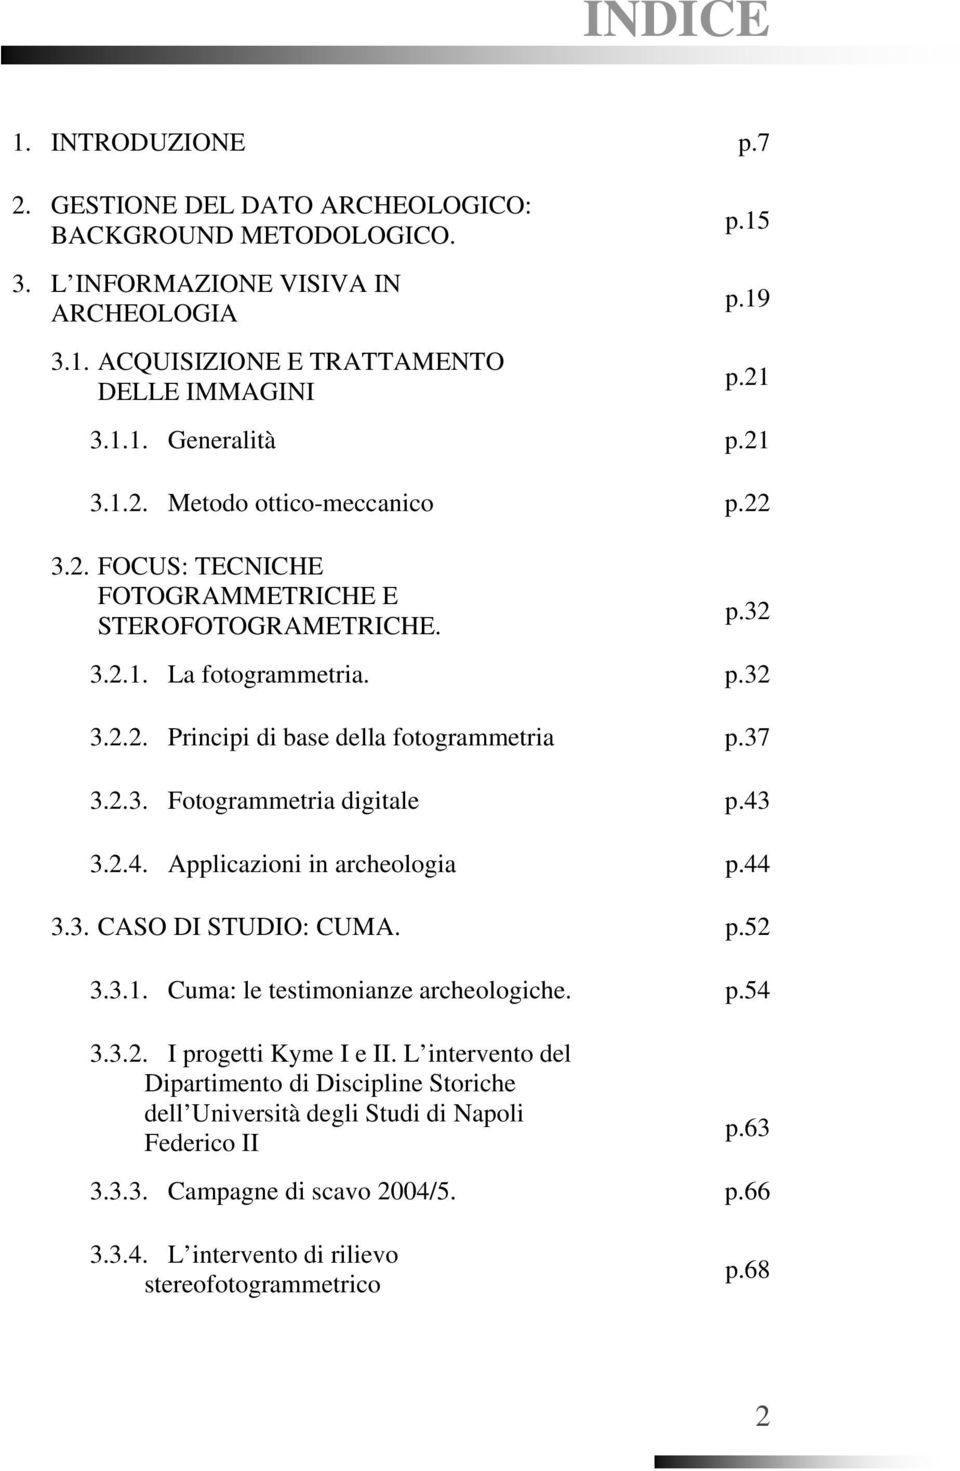 43 3.2.4. Applicazioni in archeologia p.44 3.3. CASO DI STUDIO: CUMA. p.52 3.3.1. Cuma: le testimonianze archeologiche. p.54 3.3.2. I progetti Kyme I e II.